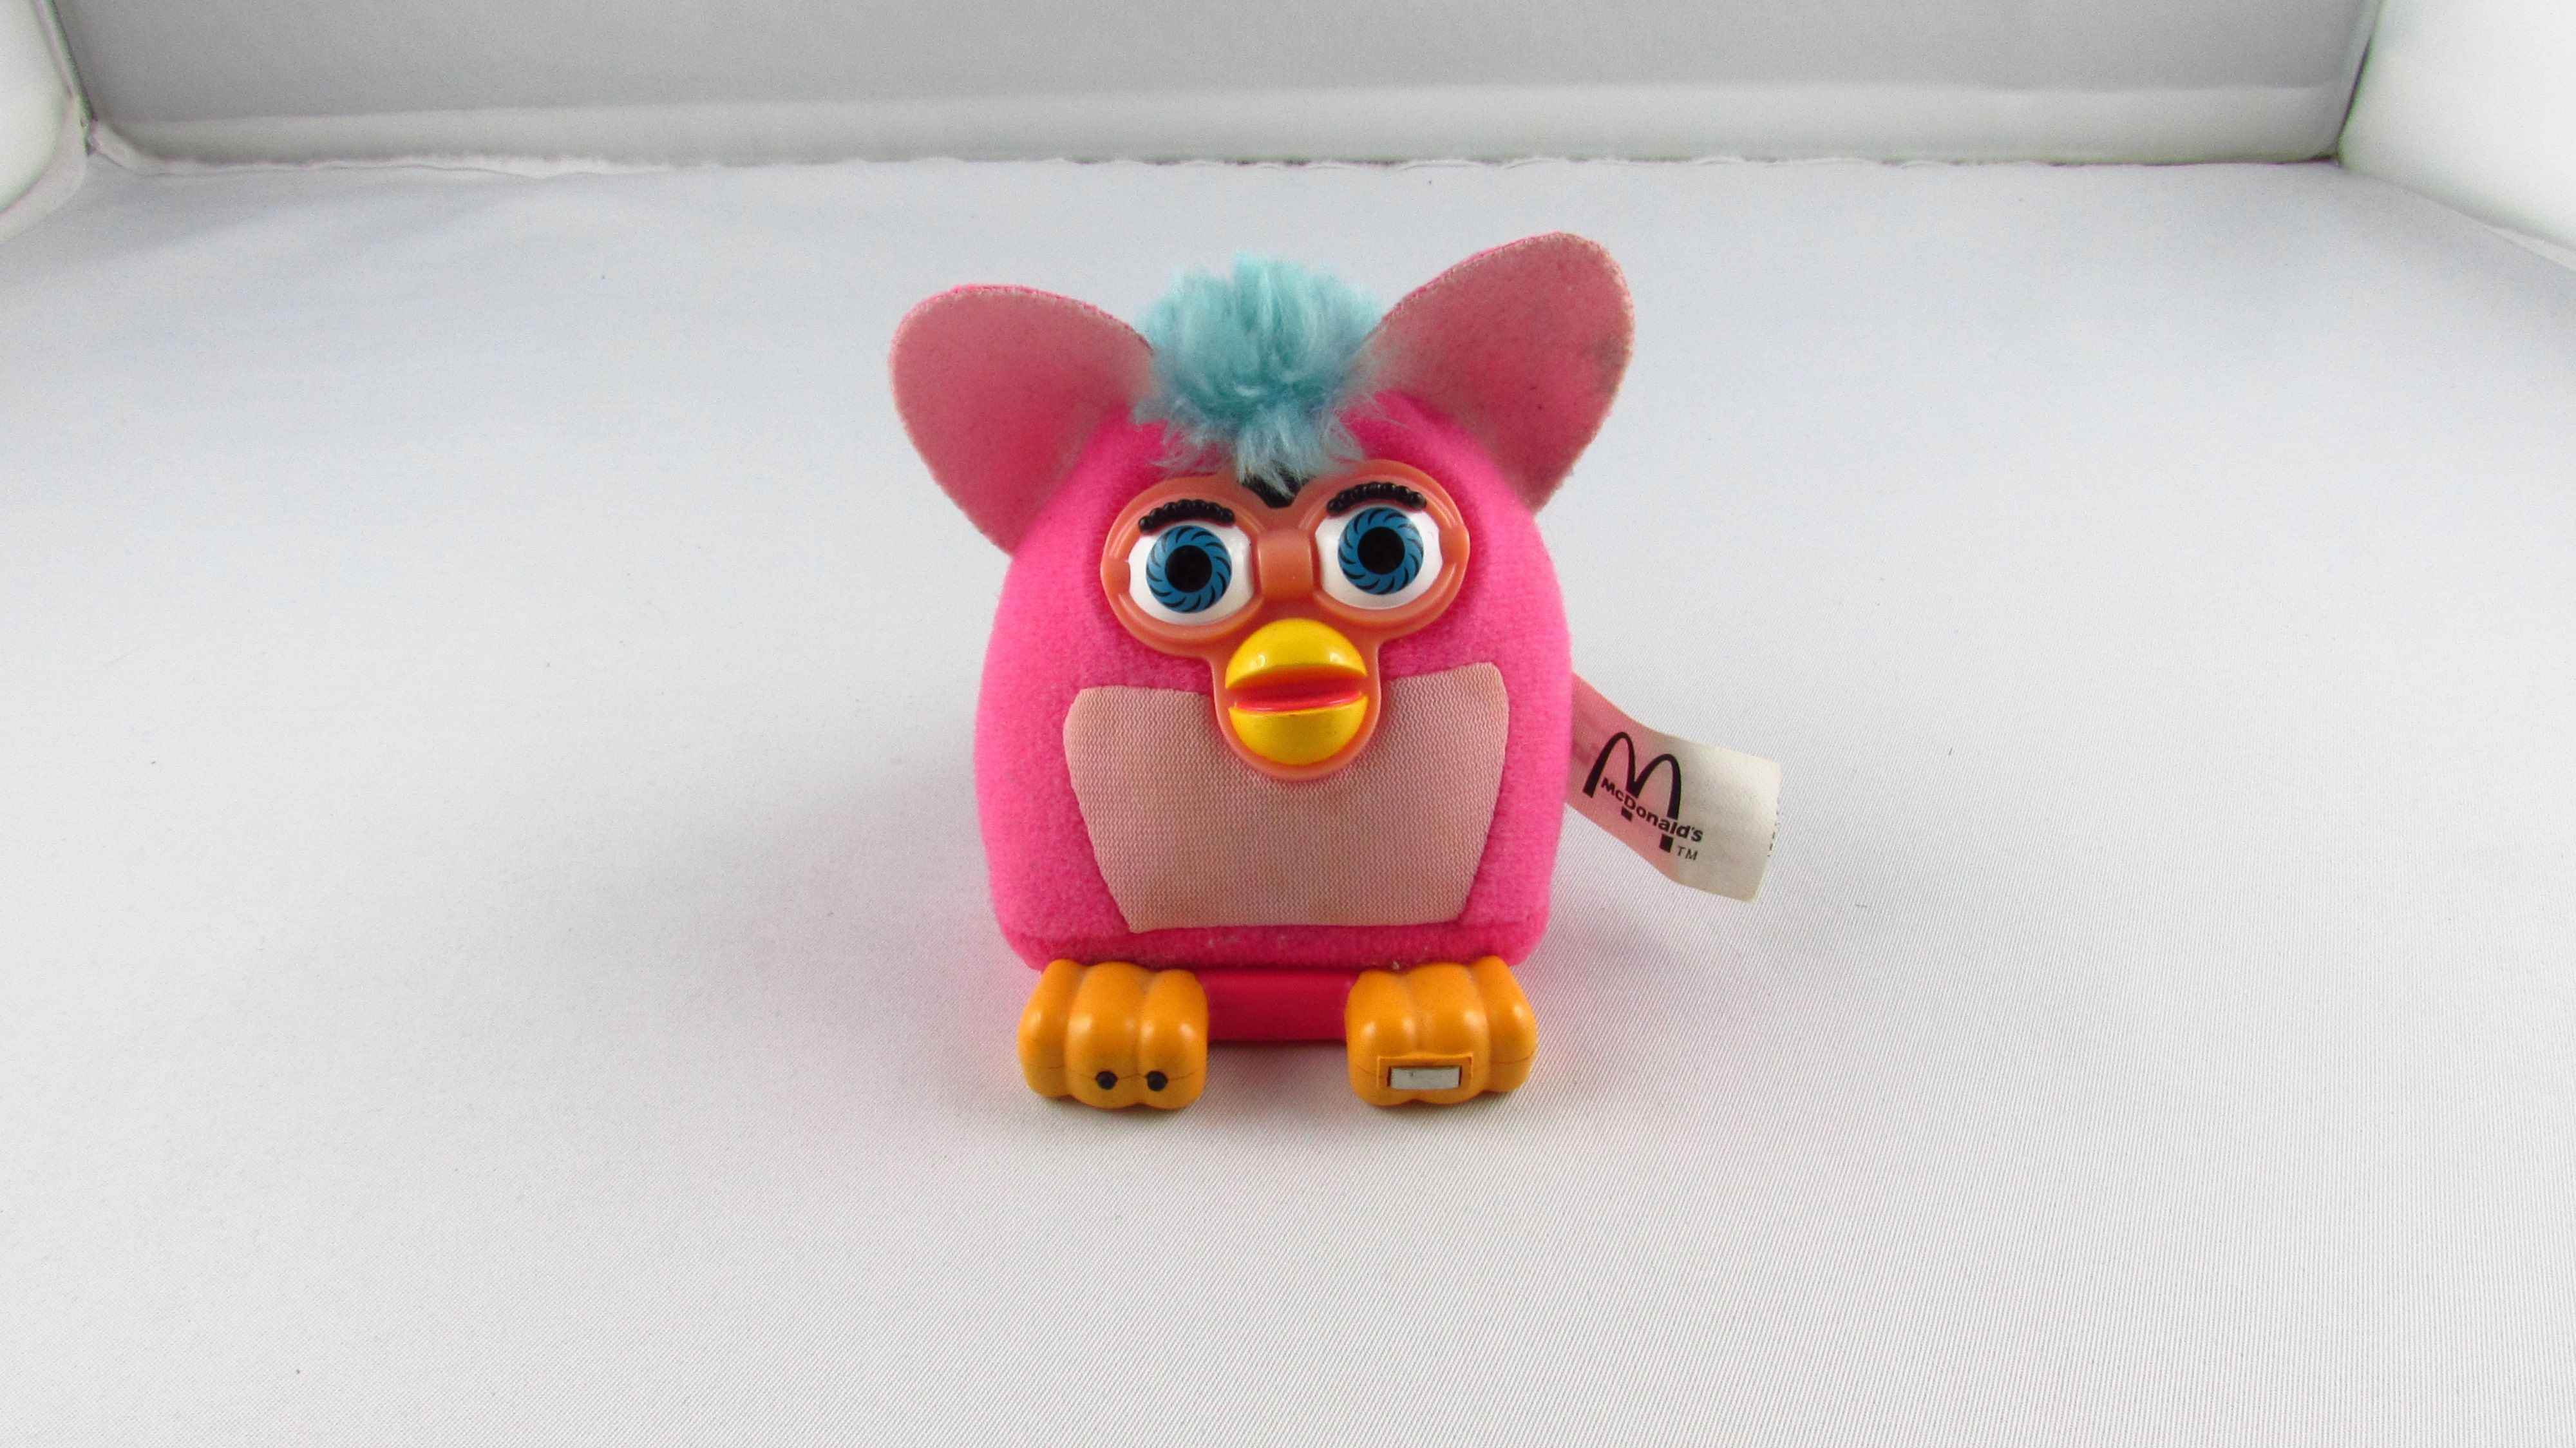 TIGER - McDonald's - Furby Shelby Pink Figurka Kolekcjonerska 2001 r.